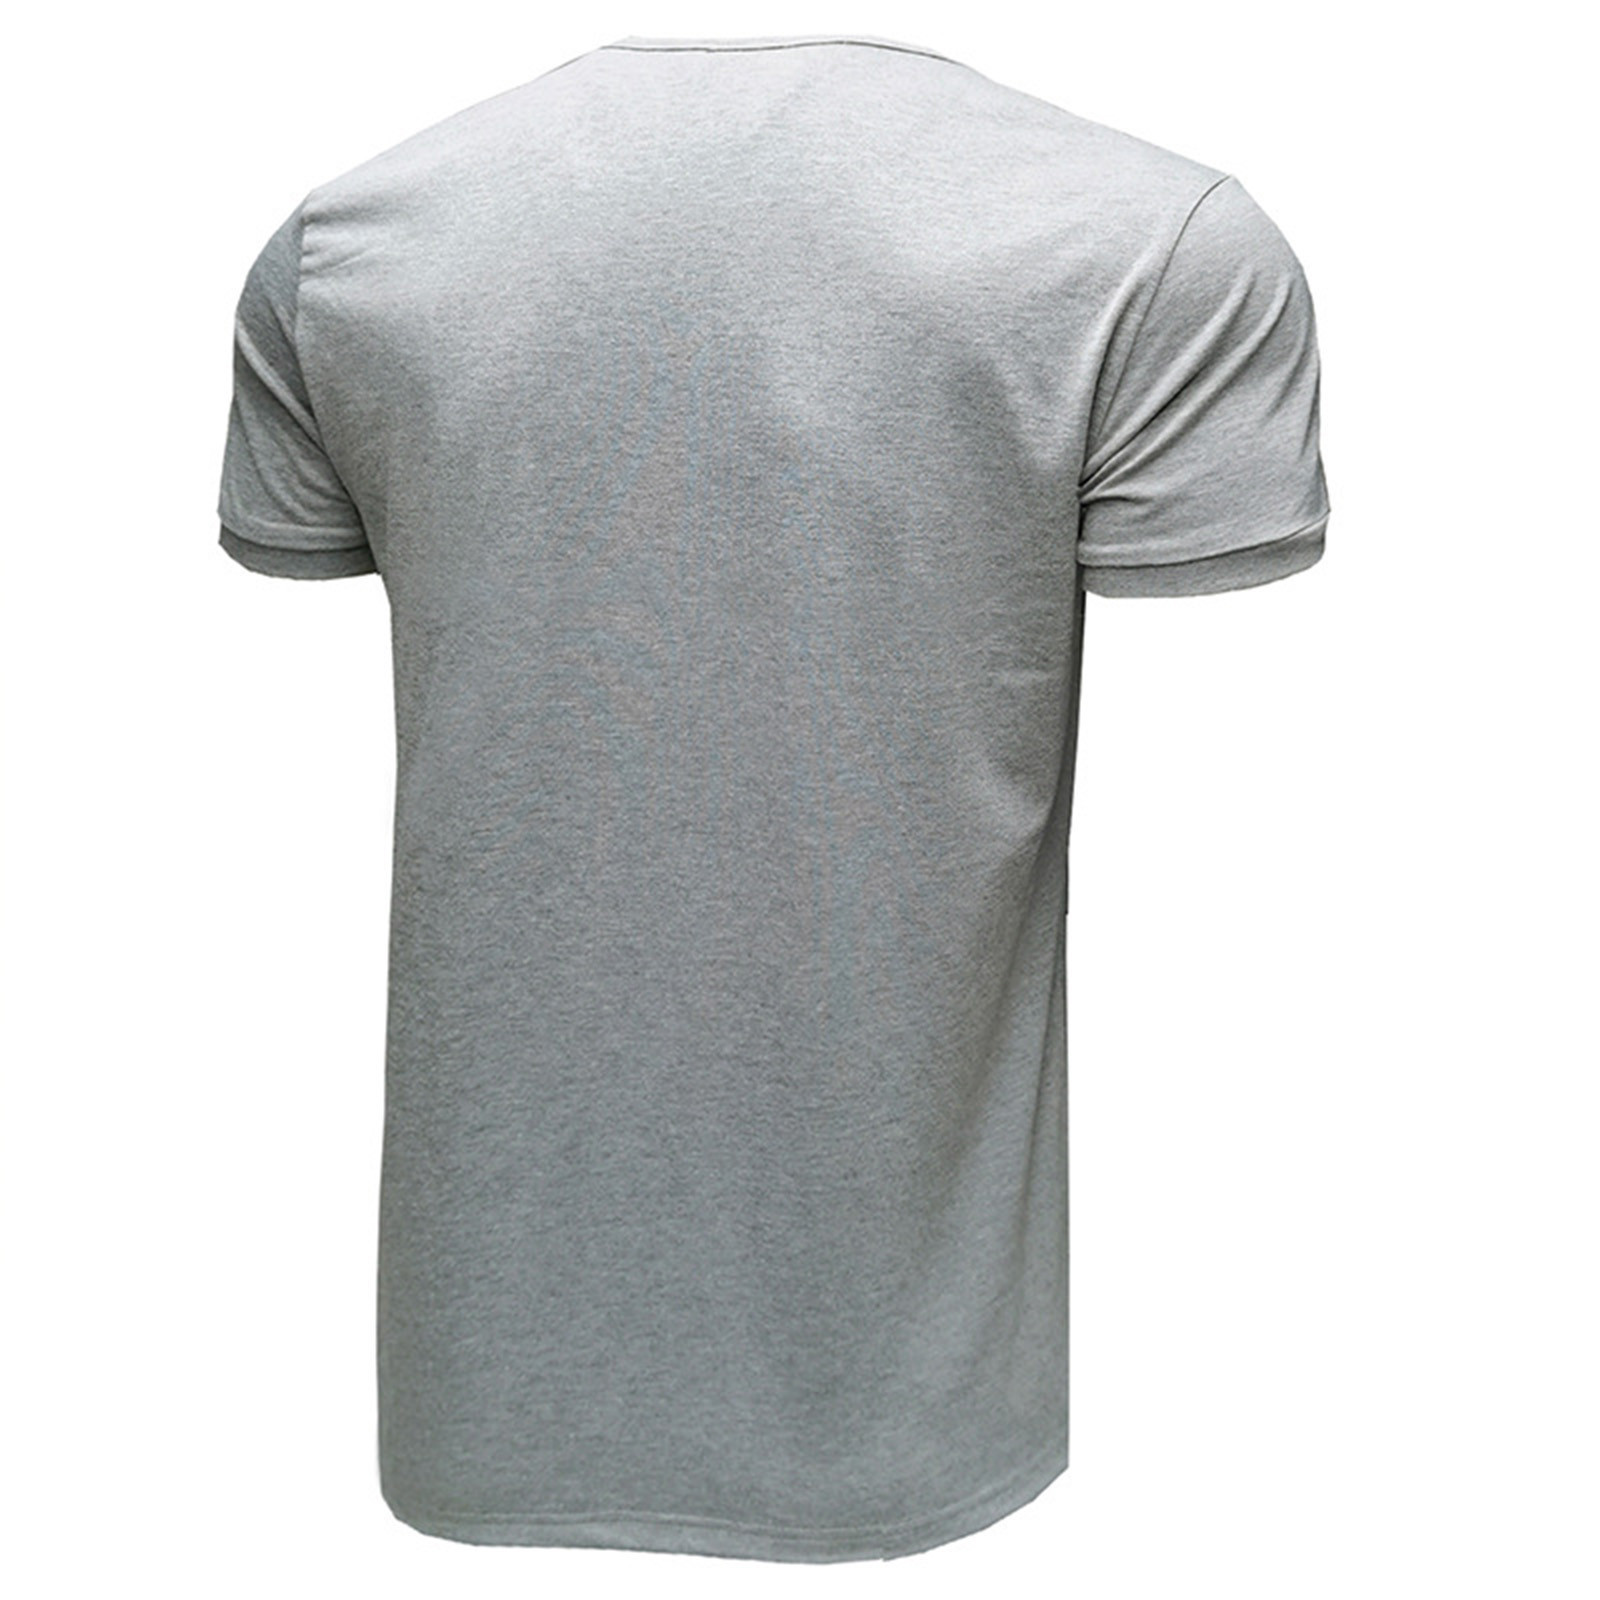 RBX 5 Pack Cotton Tank Top T Shirts A Shirts White Gray Black Men's S M L  XL